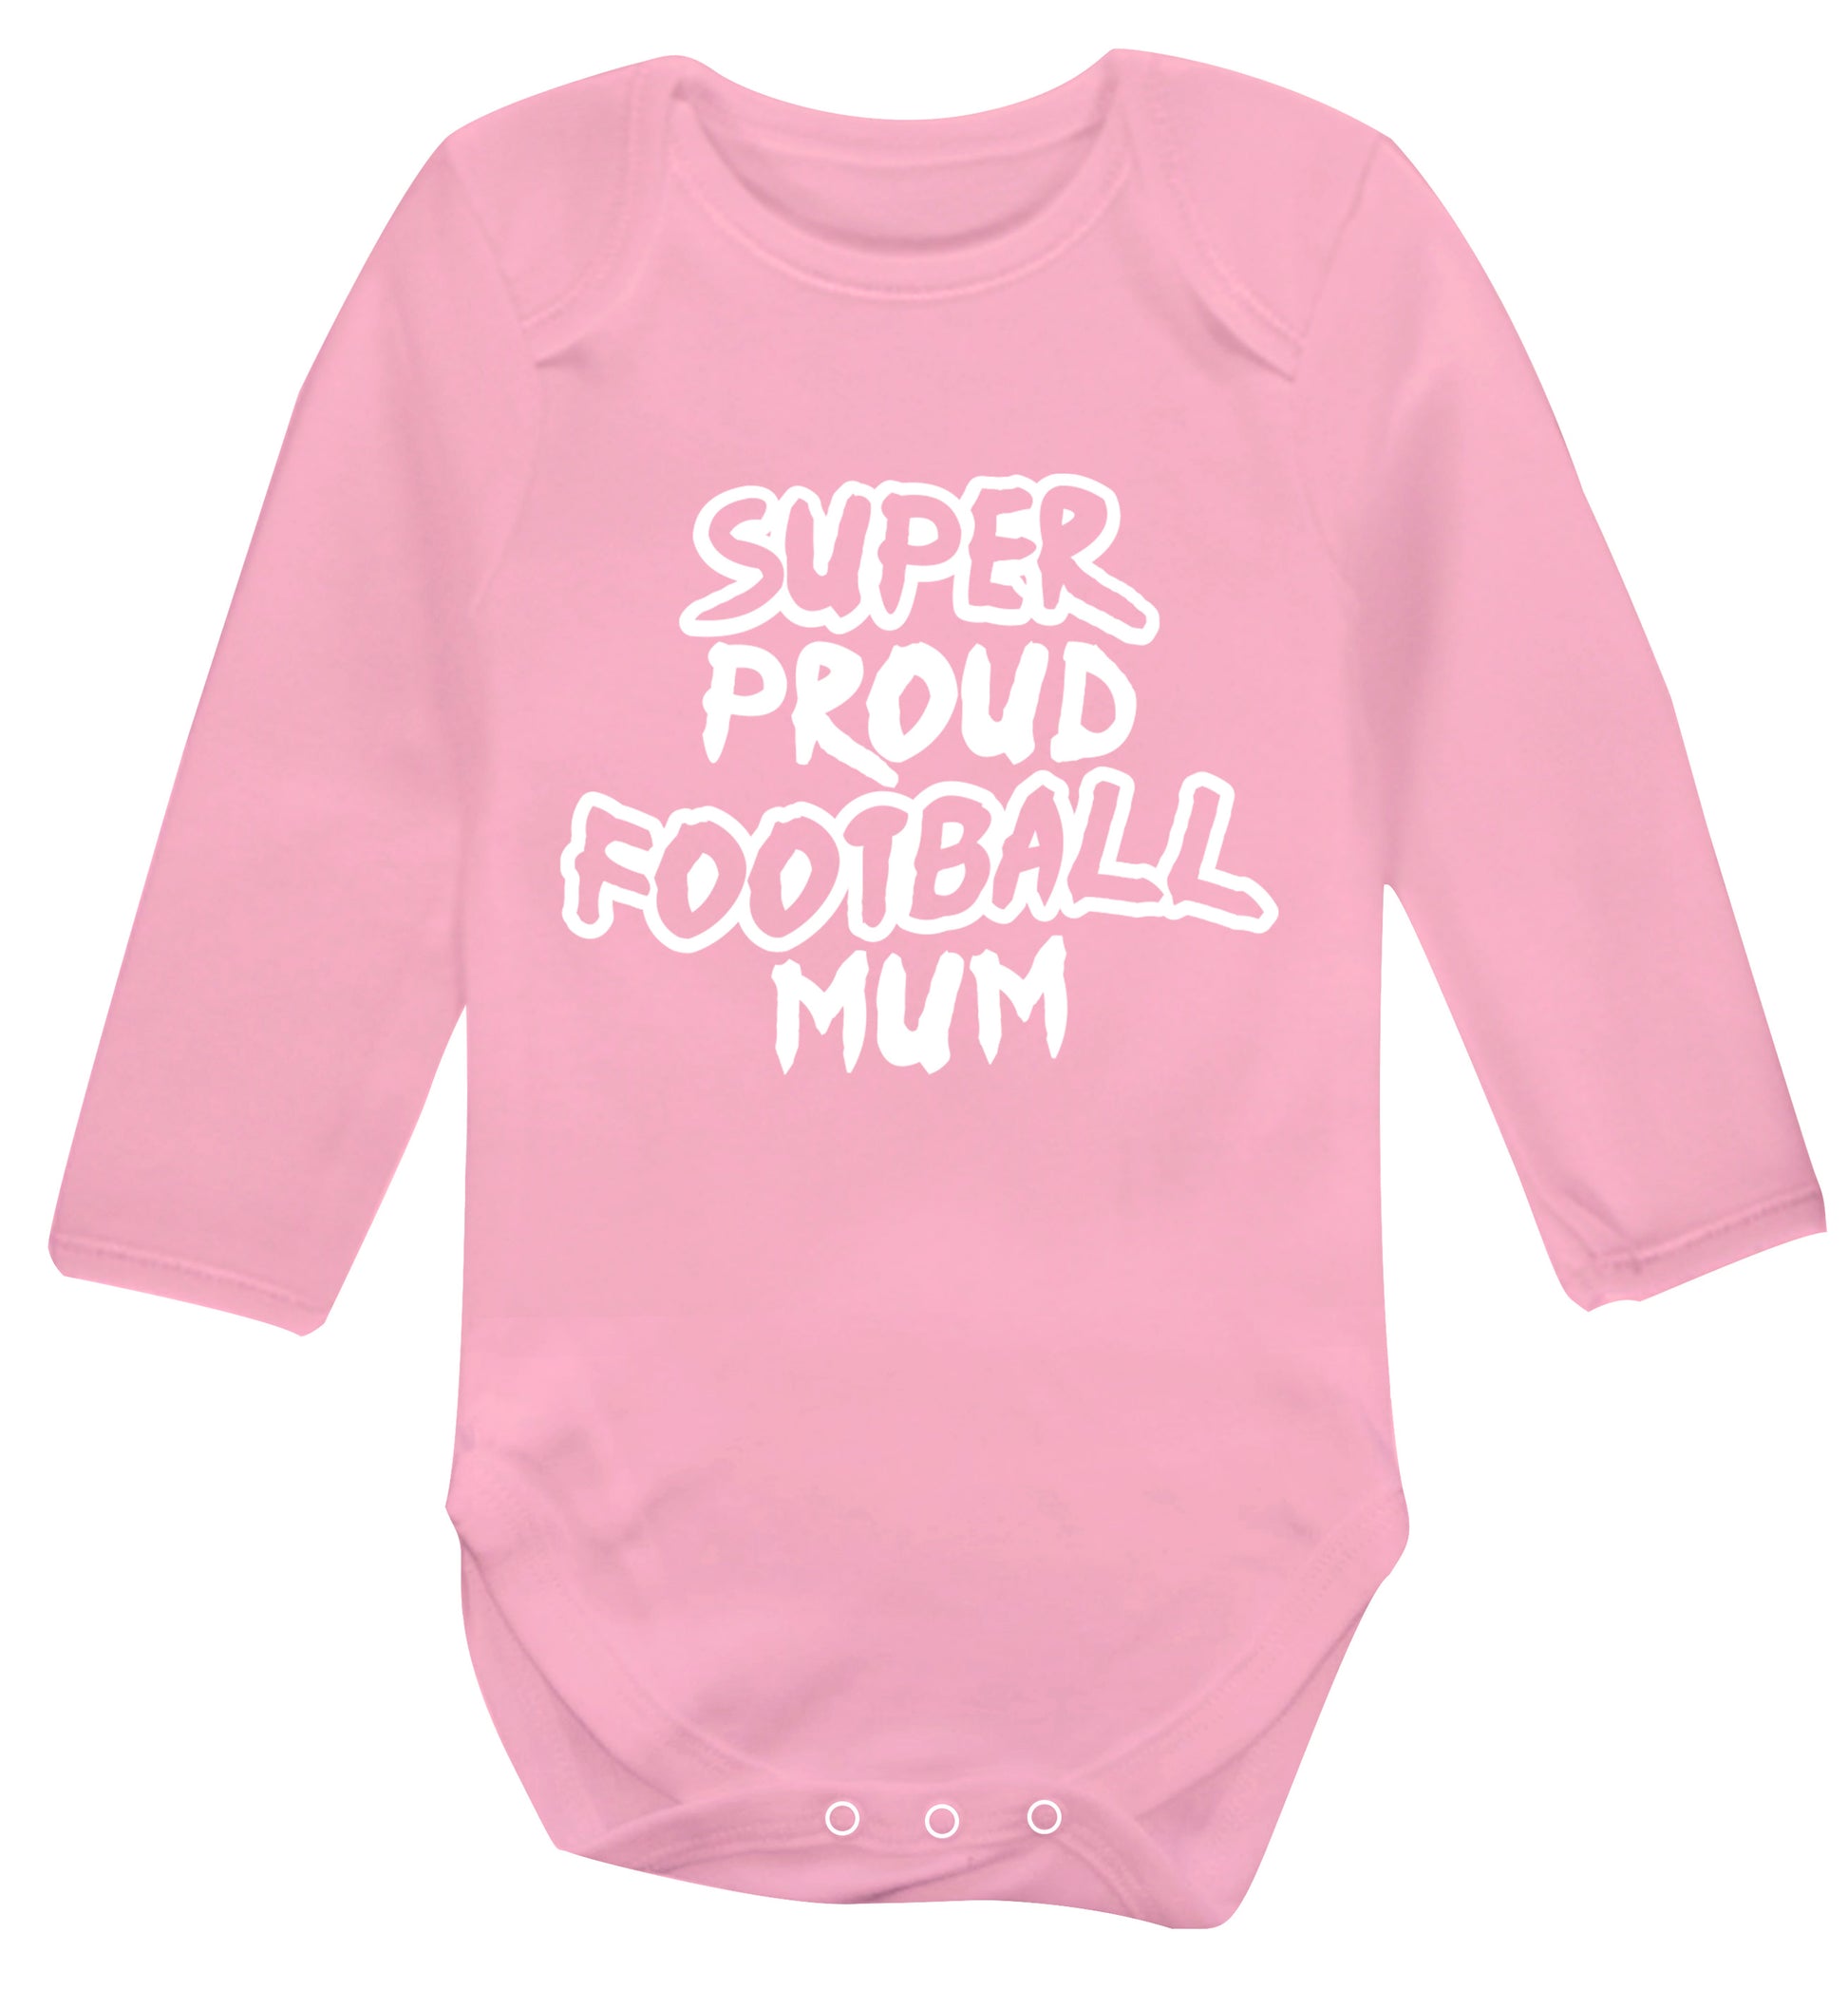 Super proud football mum Baby Vest long sleeved pale pink 6-12 months